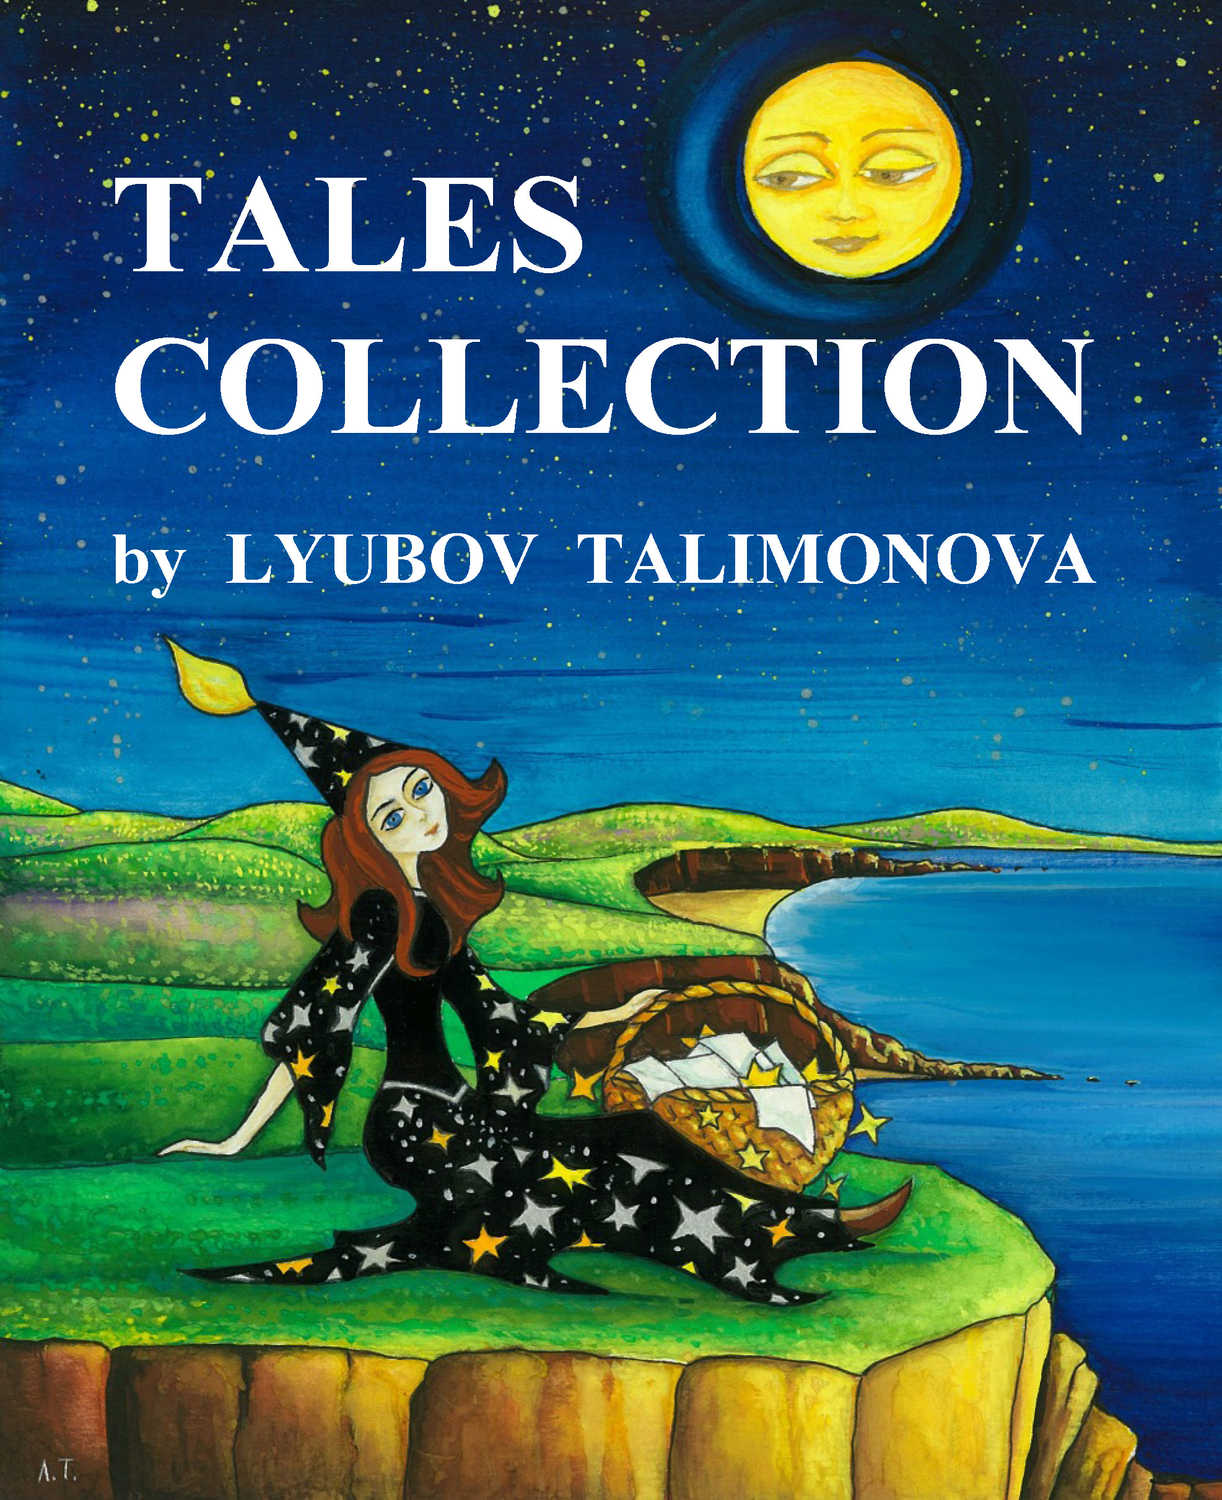 Талимонова Любовь - «Tales collection»